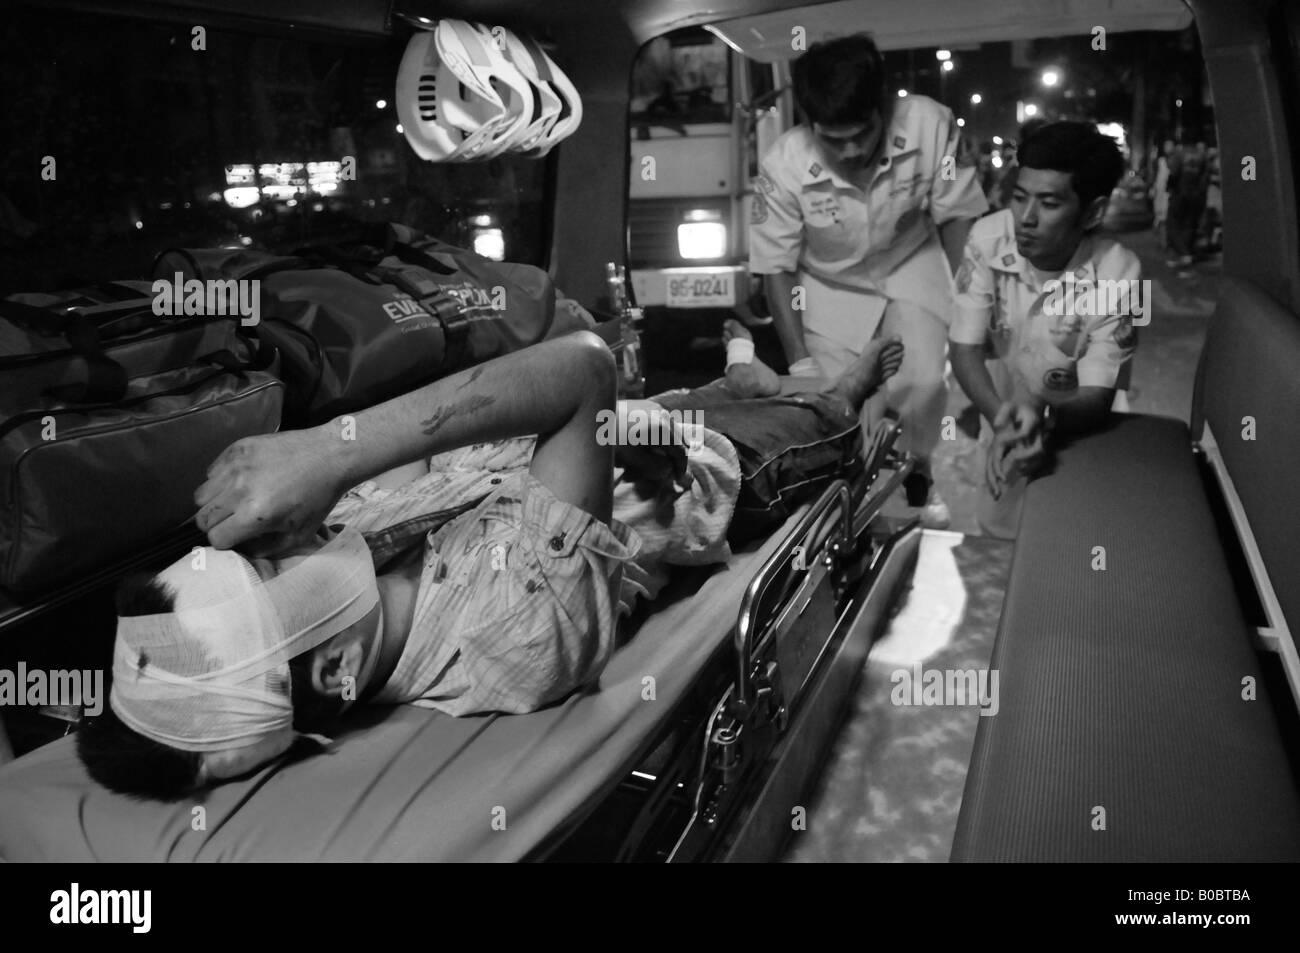 ruamkatanyu foundation (bodysnatchers) assisting injured motorcyclist, bangkok , thailand Stock Photo